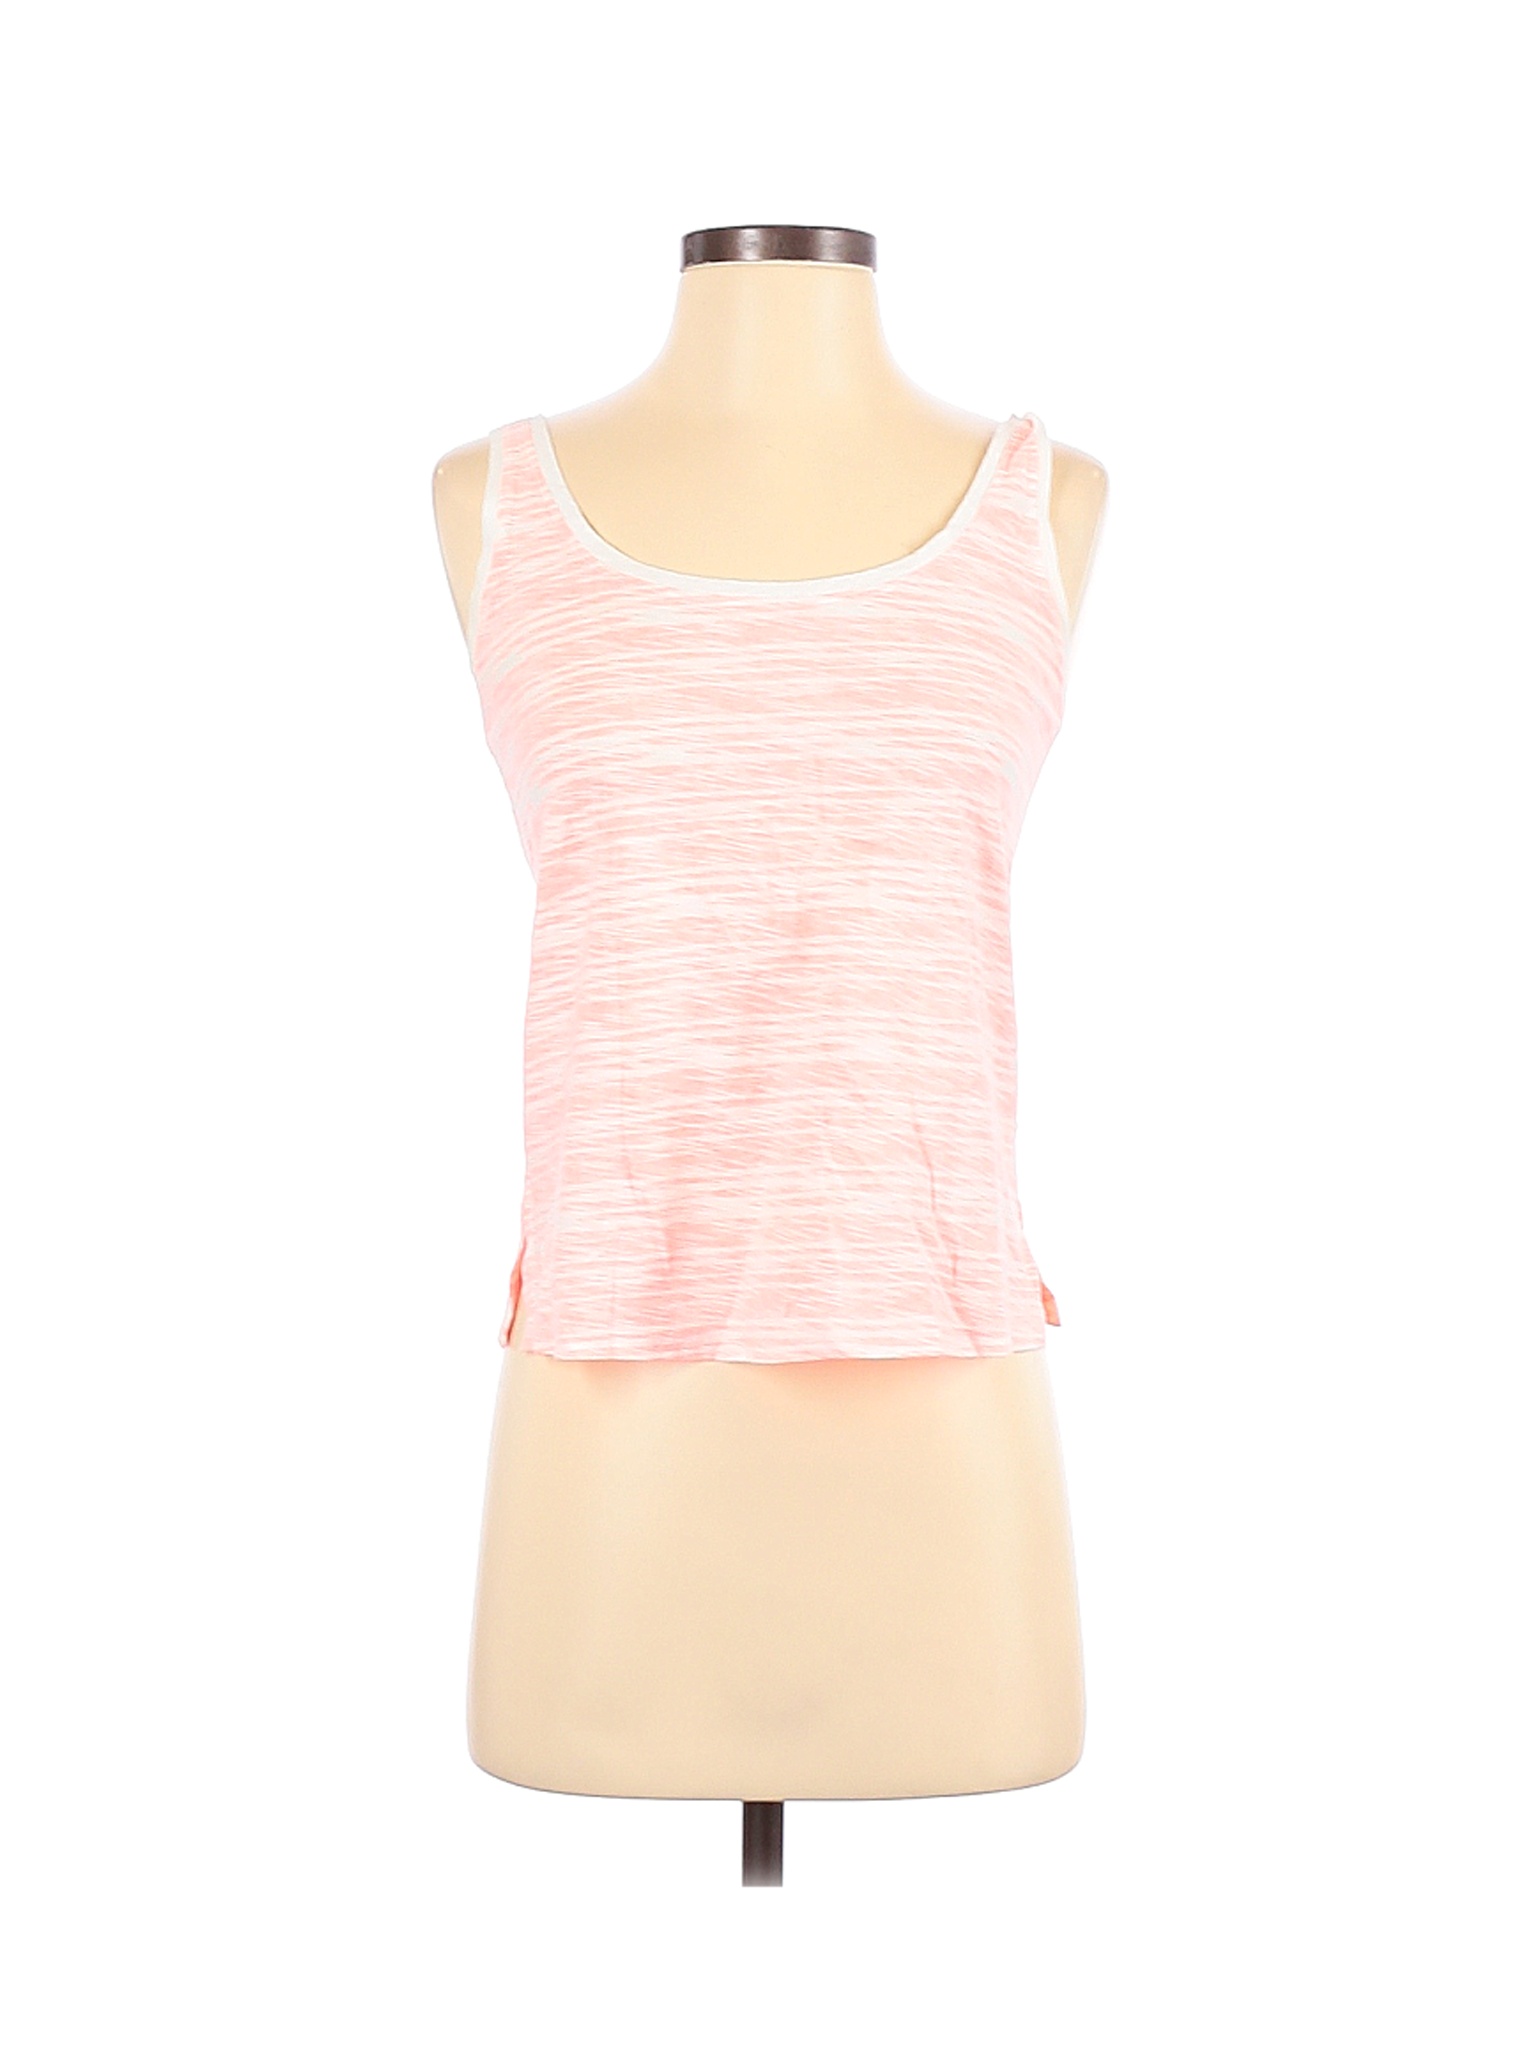 Gef Women Pink Sleeveless Top S | eBay